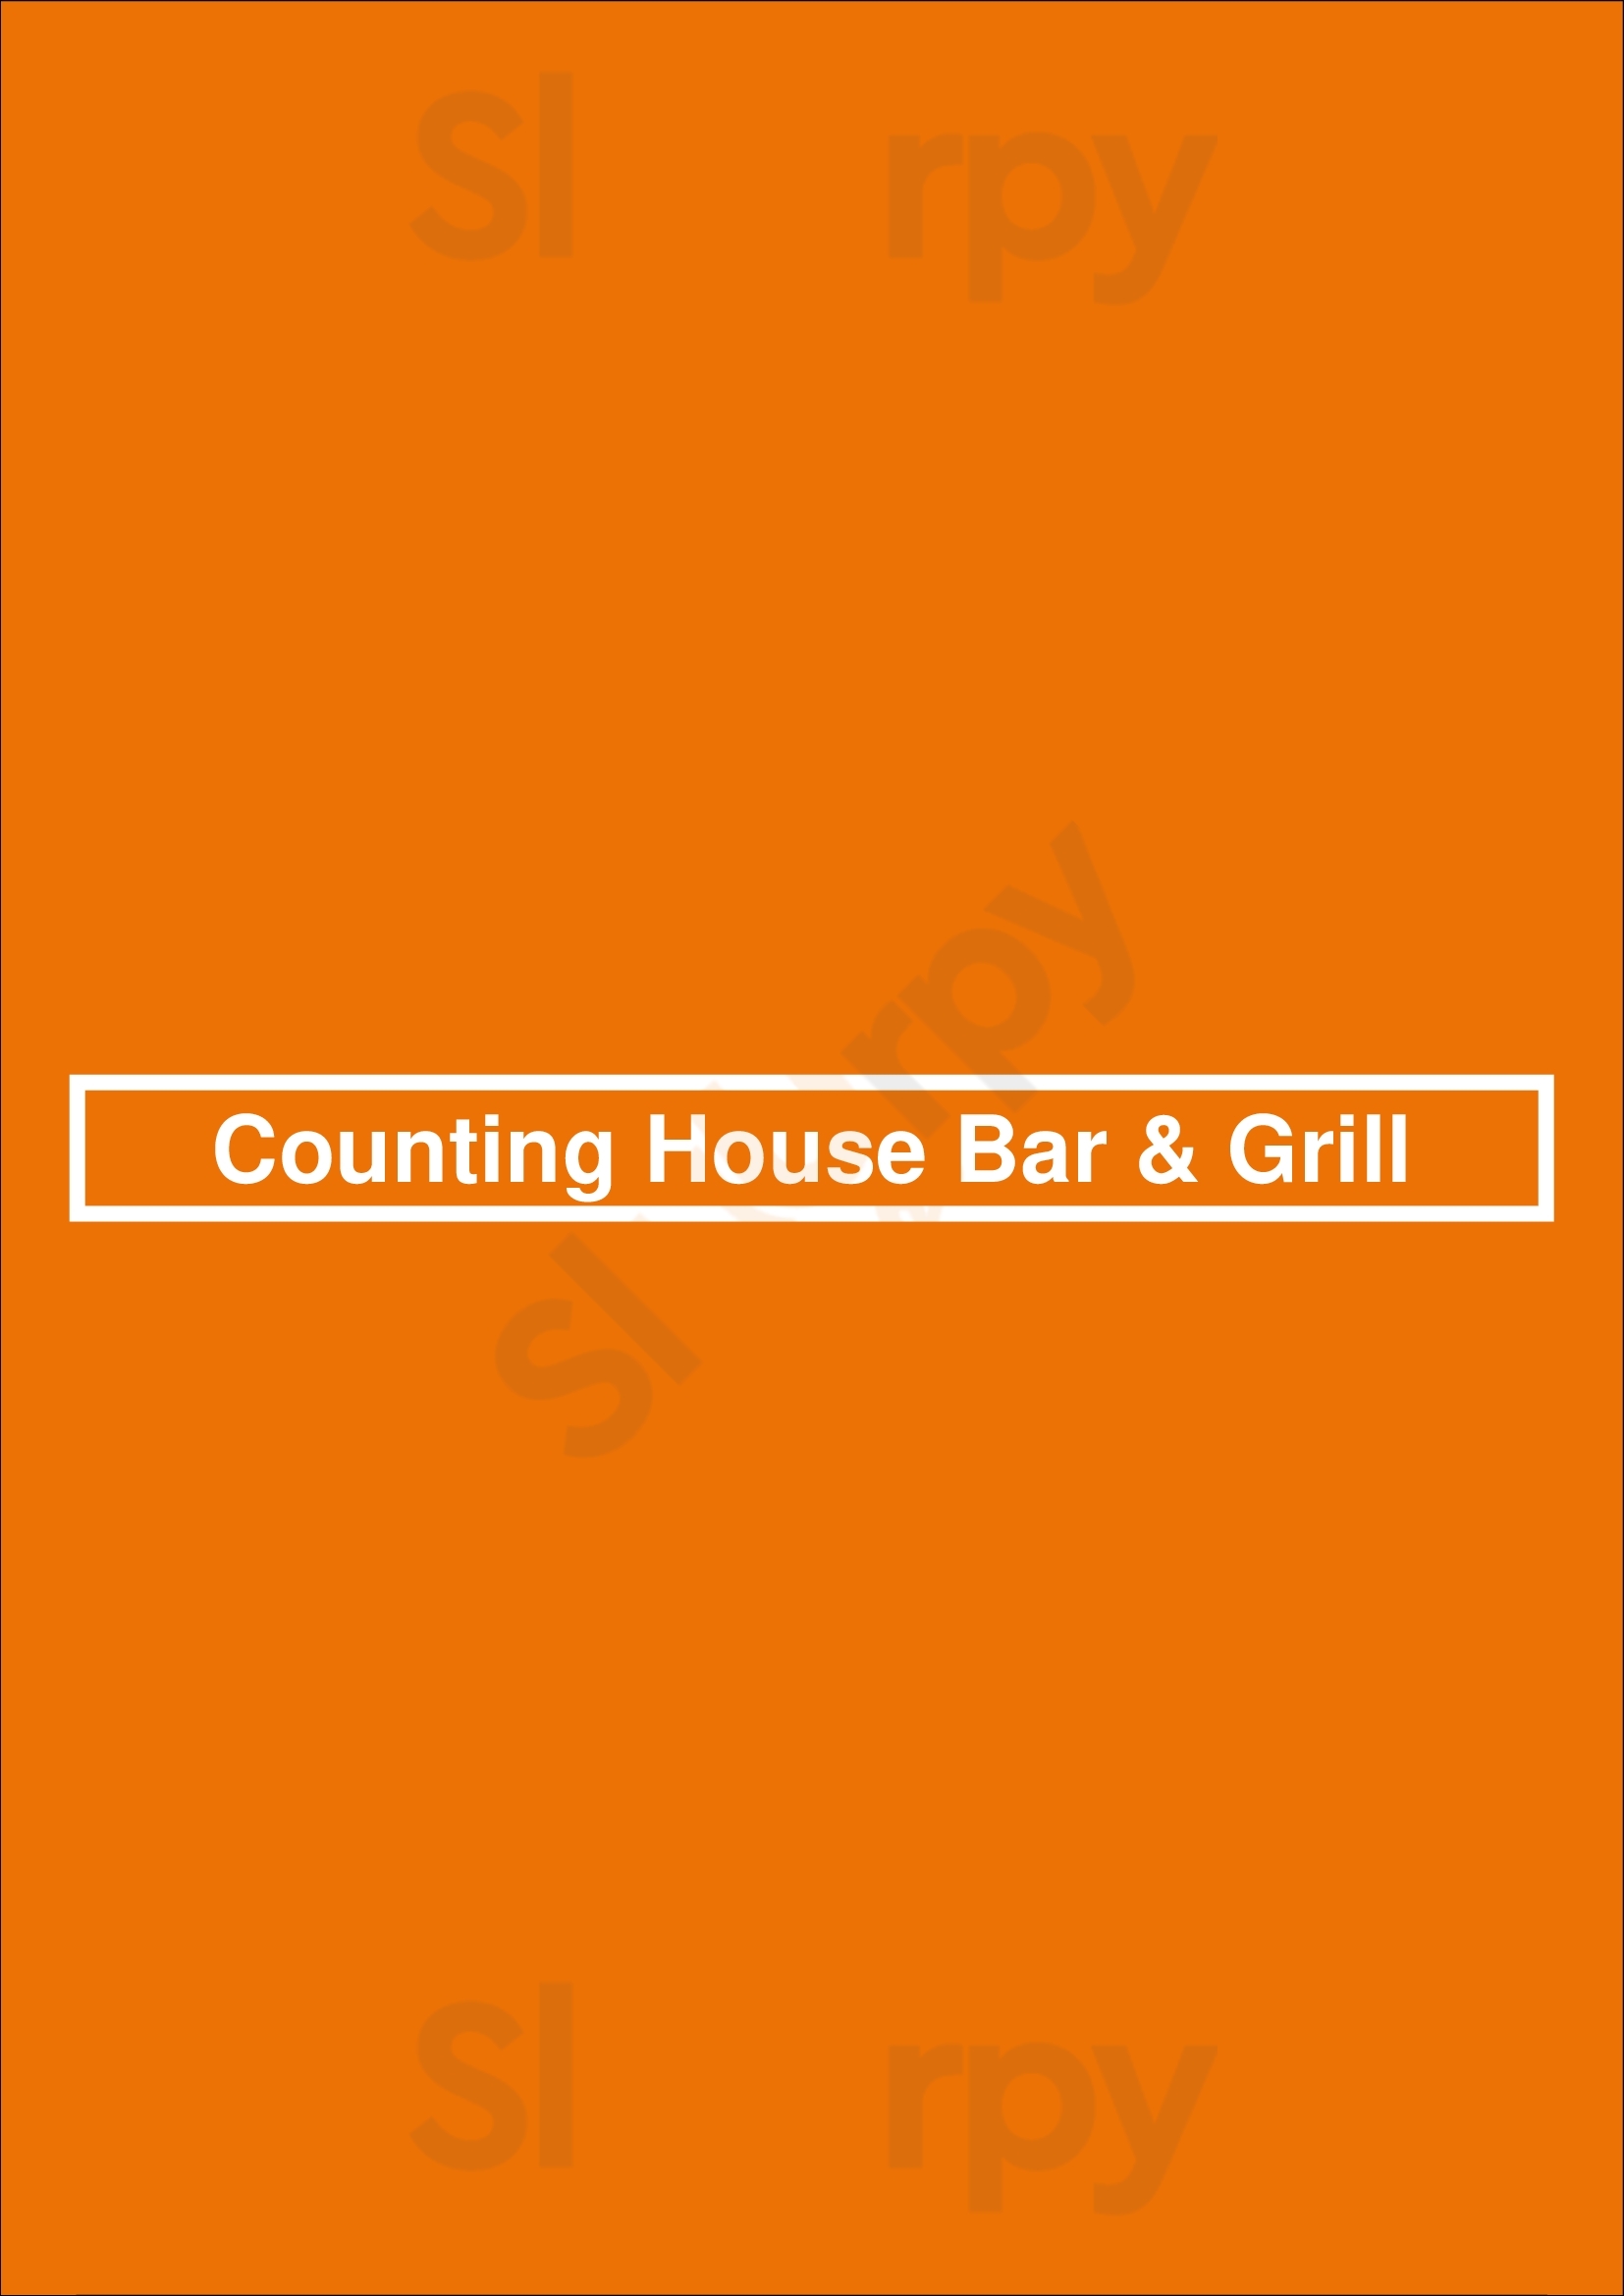 Counting House Bar & Grill Mornington Menu - 1